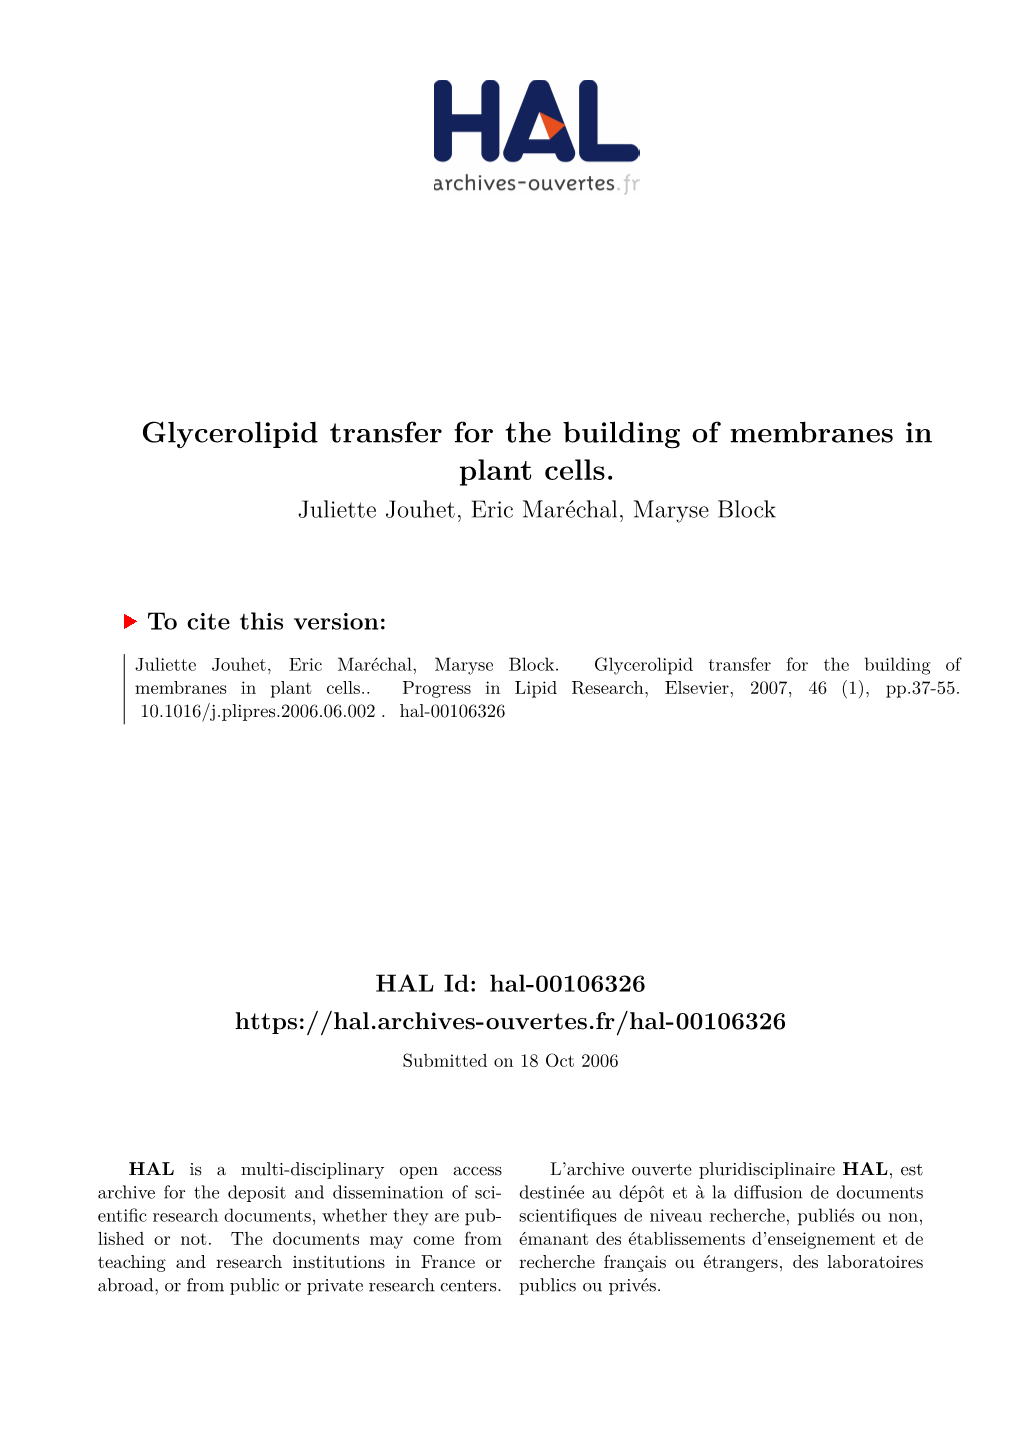 Glycerolipid Transfer for the Building of Membranes in Plant Cells. Juliette Jouhet, Eric Maréchal, Maryse Block